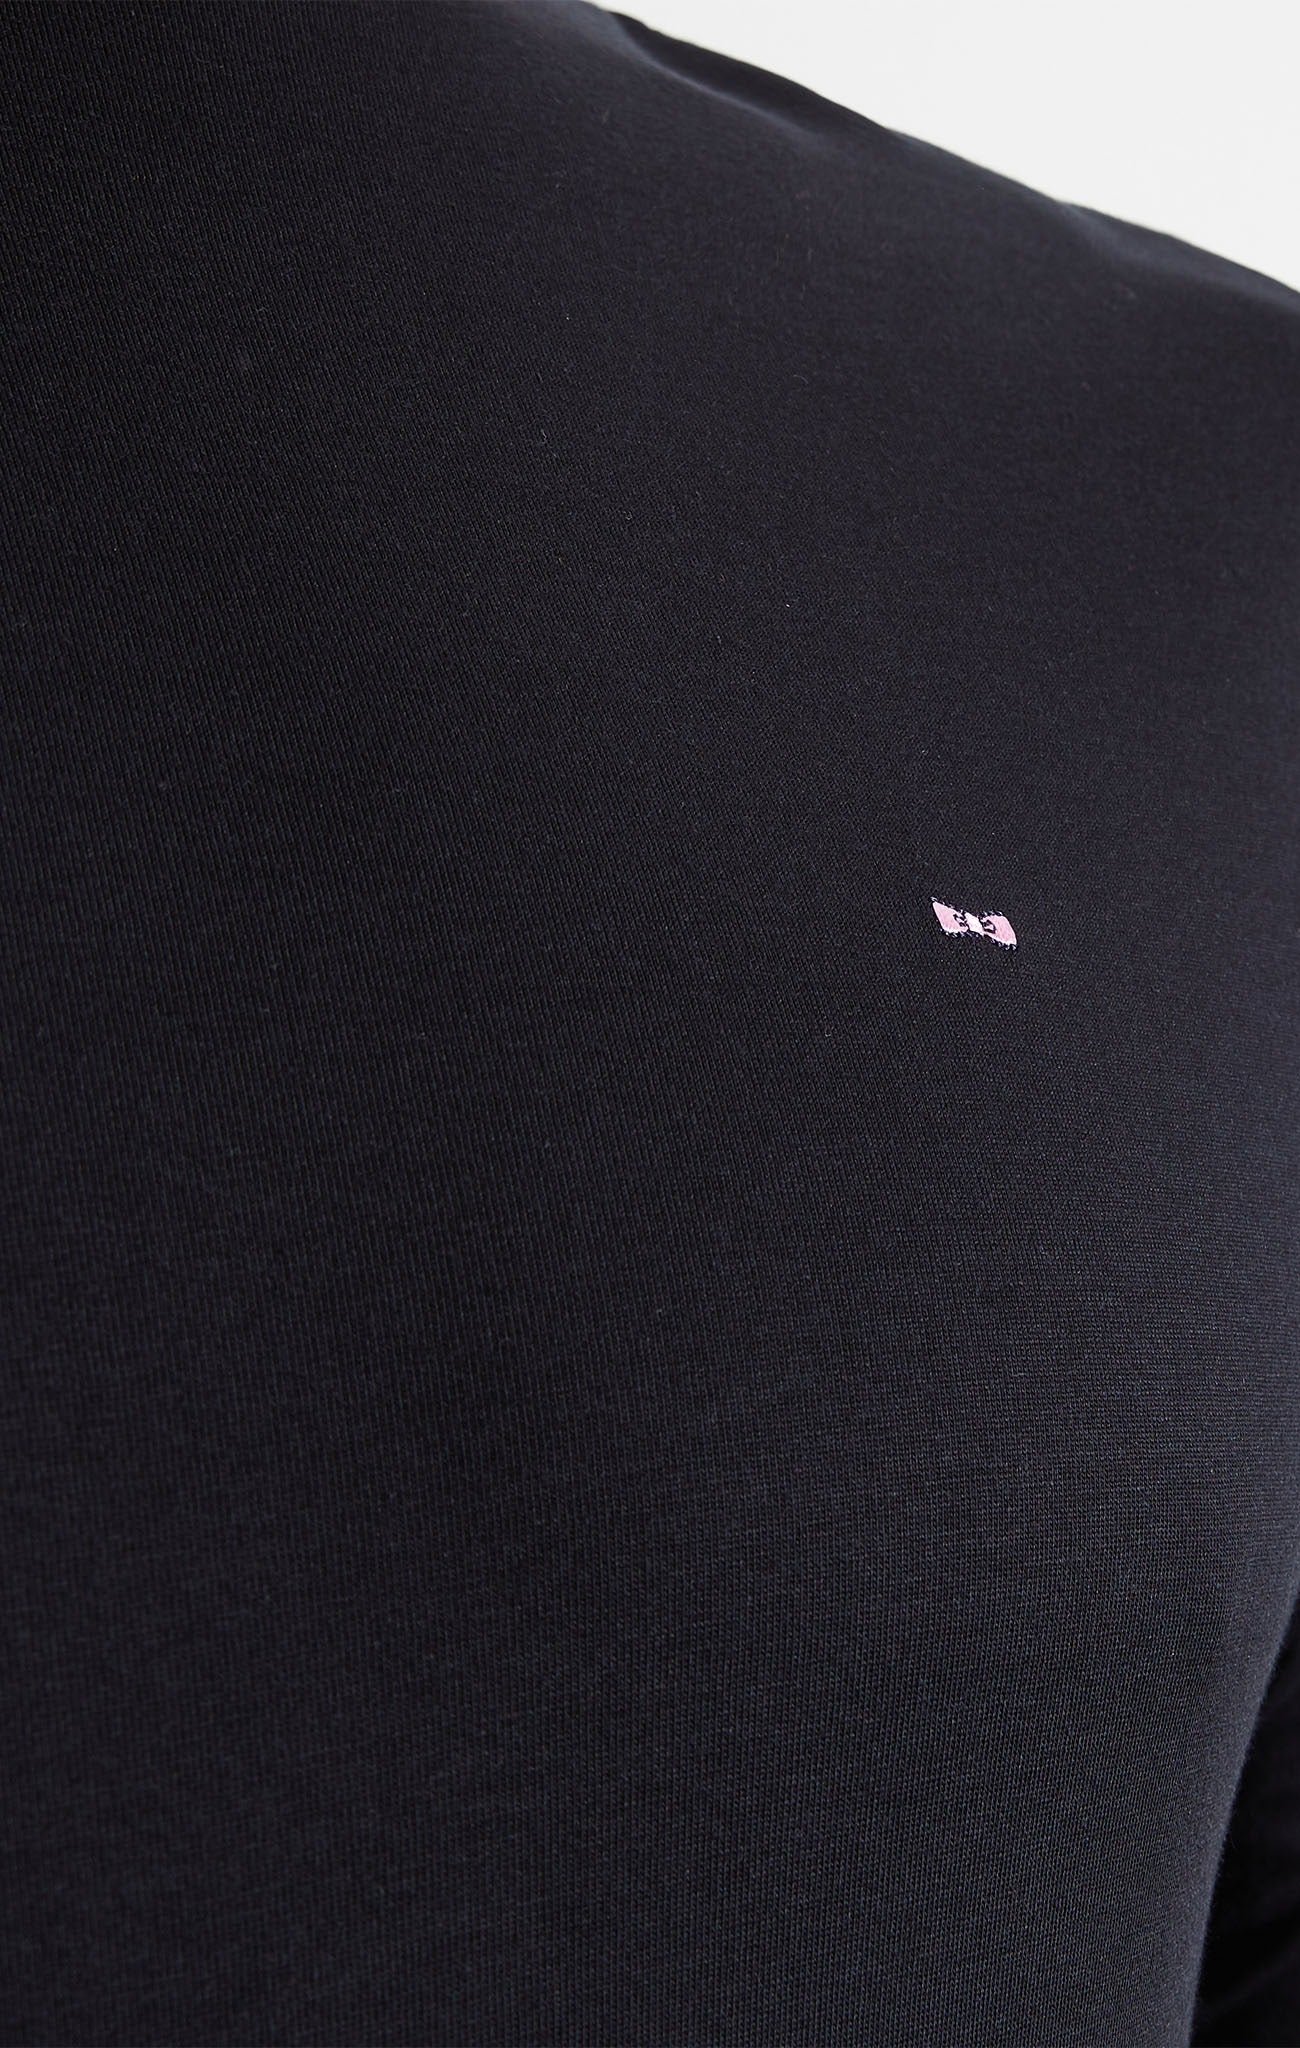 Crew neck black pima cotton t-shirt - Image 7